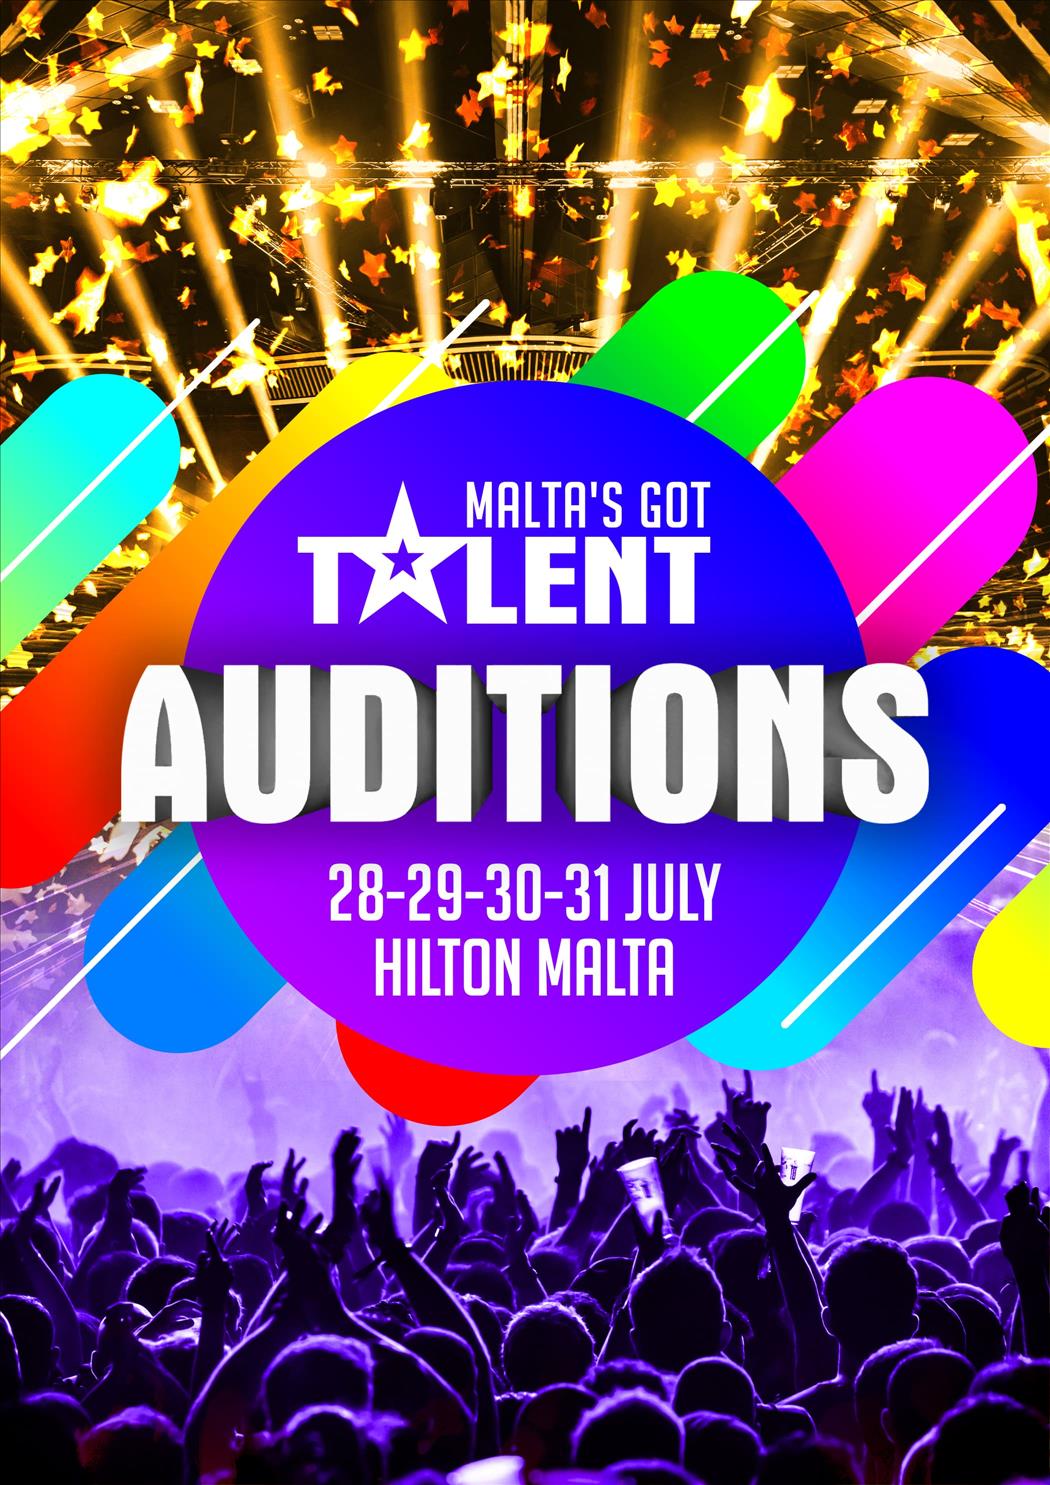 Malta's Got Talent Auditions poster